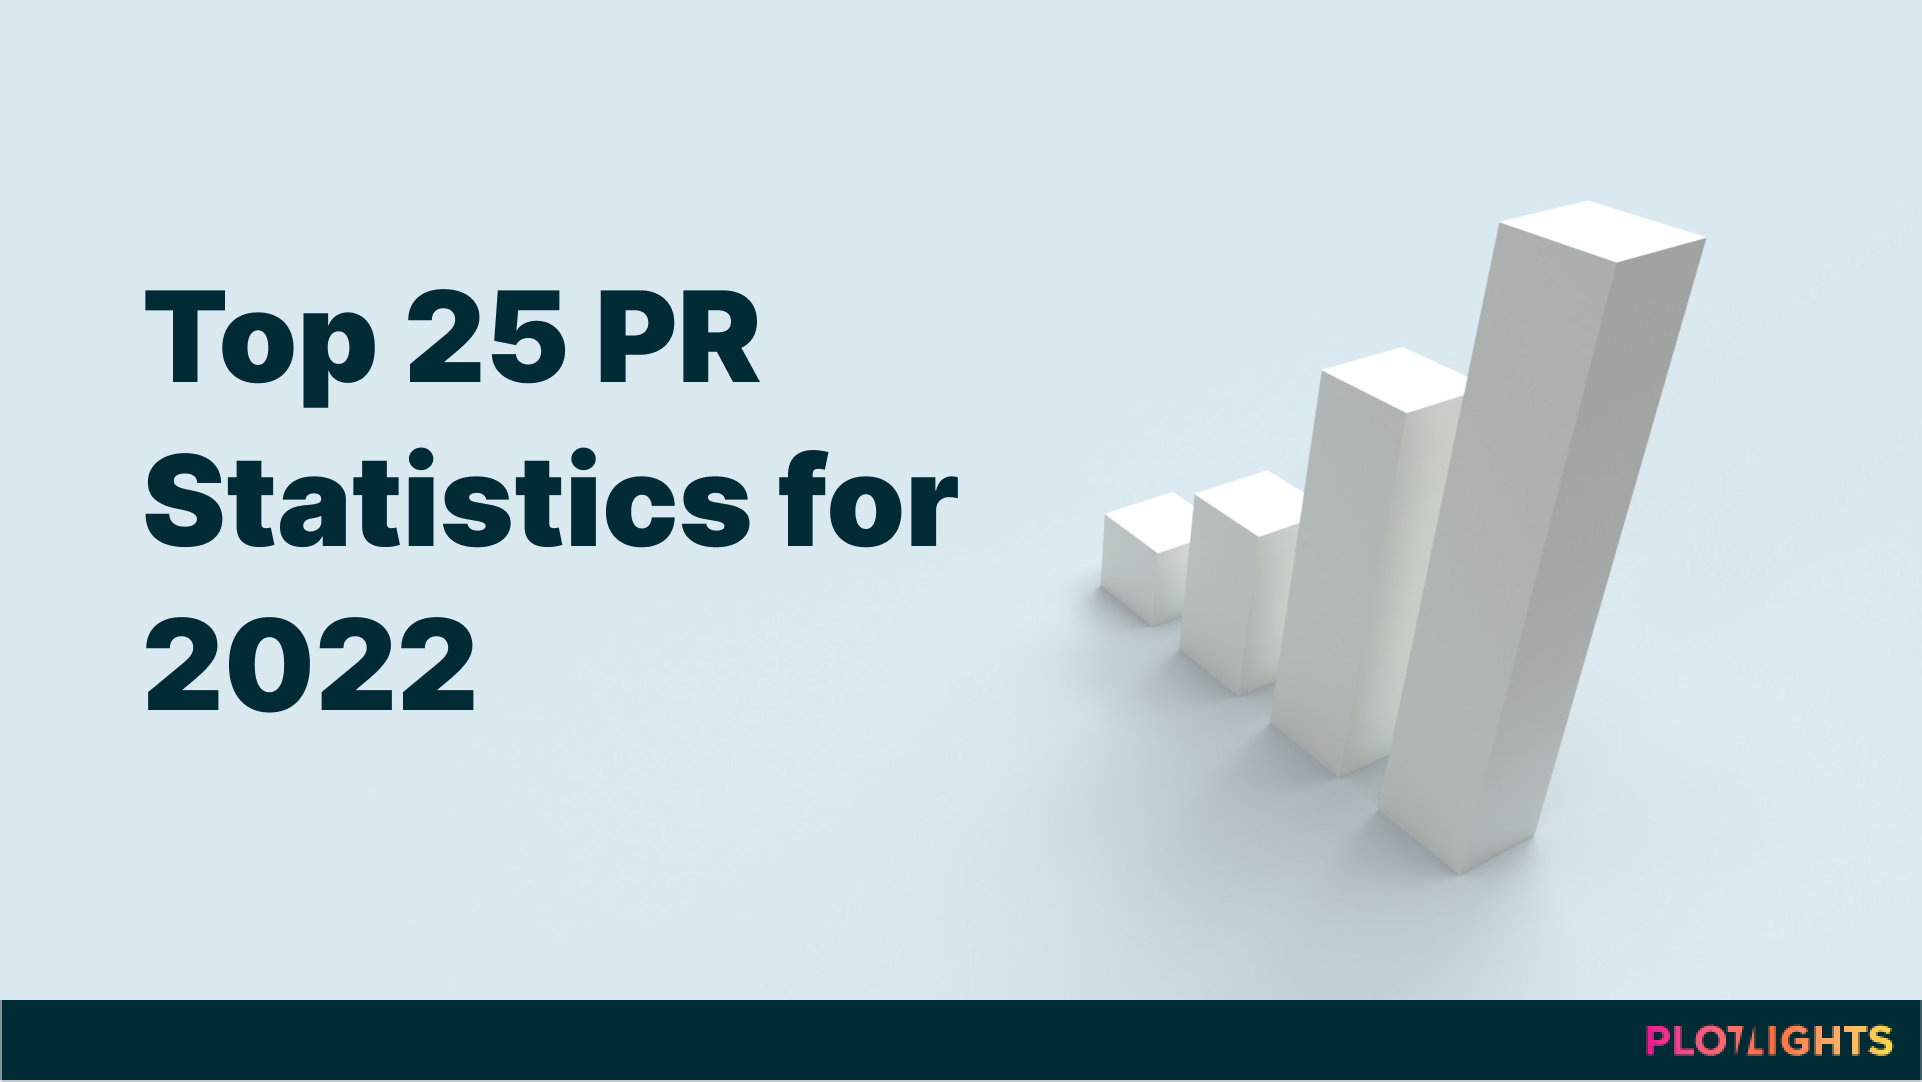 Top 25 PR statistics